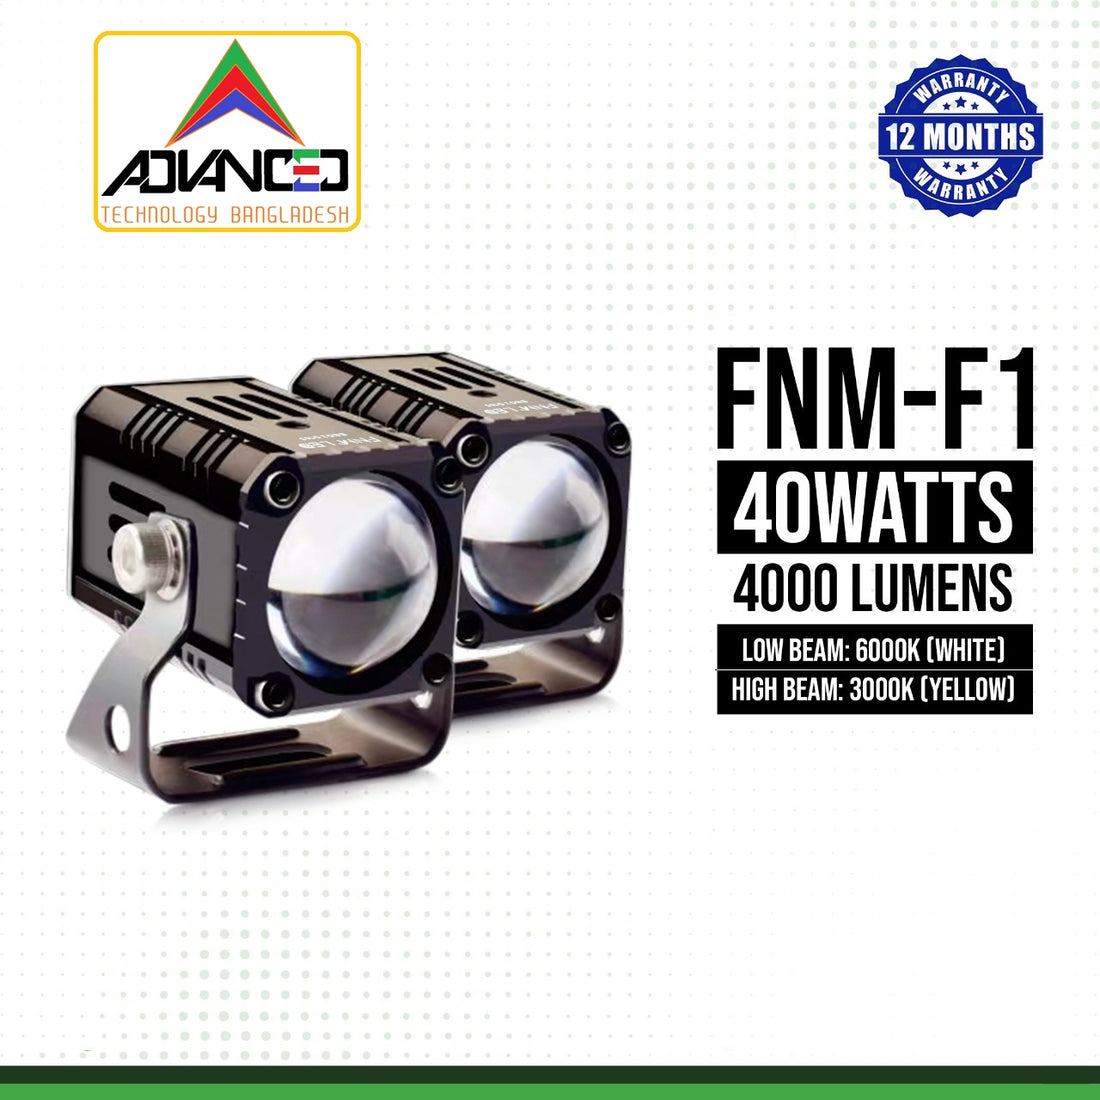 FNM-F1 PLUS LED Fog Light (2 pieces) for Bikes Price in Bangladesh